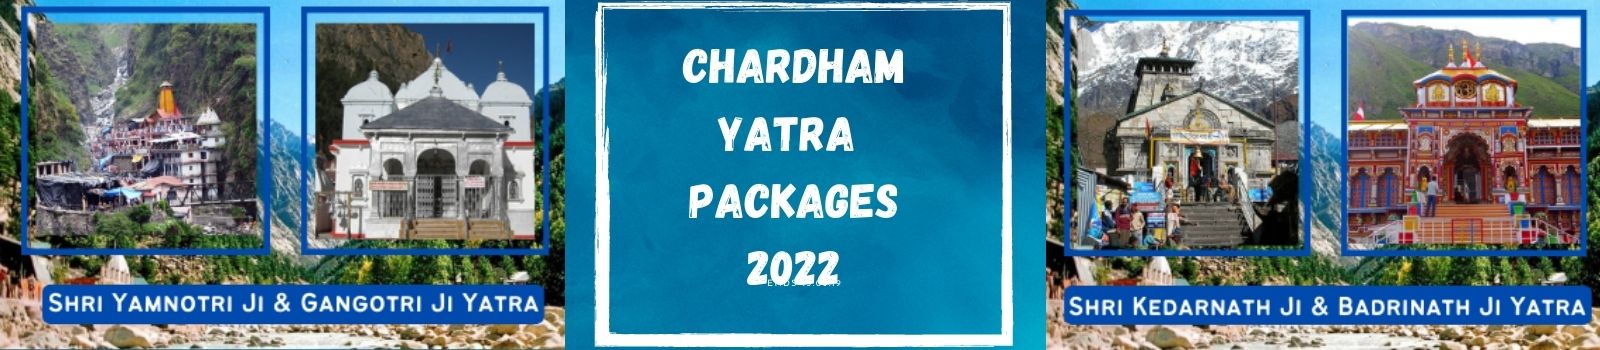 CHAR DHAM YATRA 2022